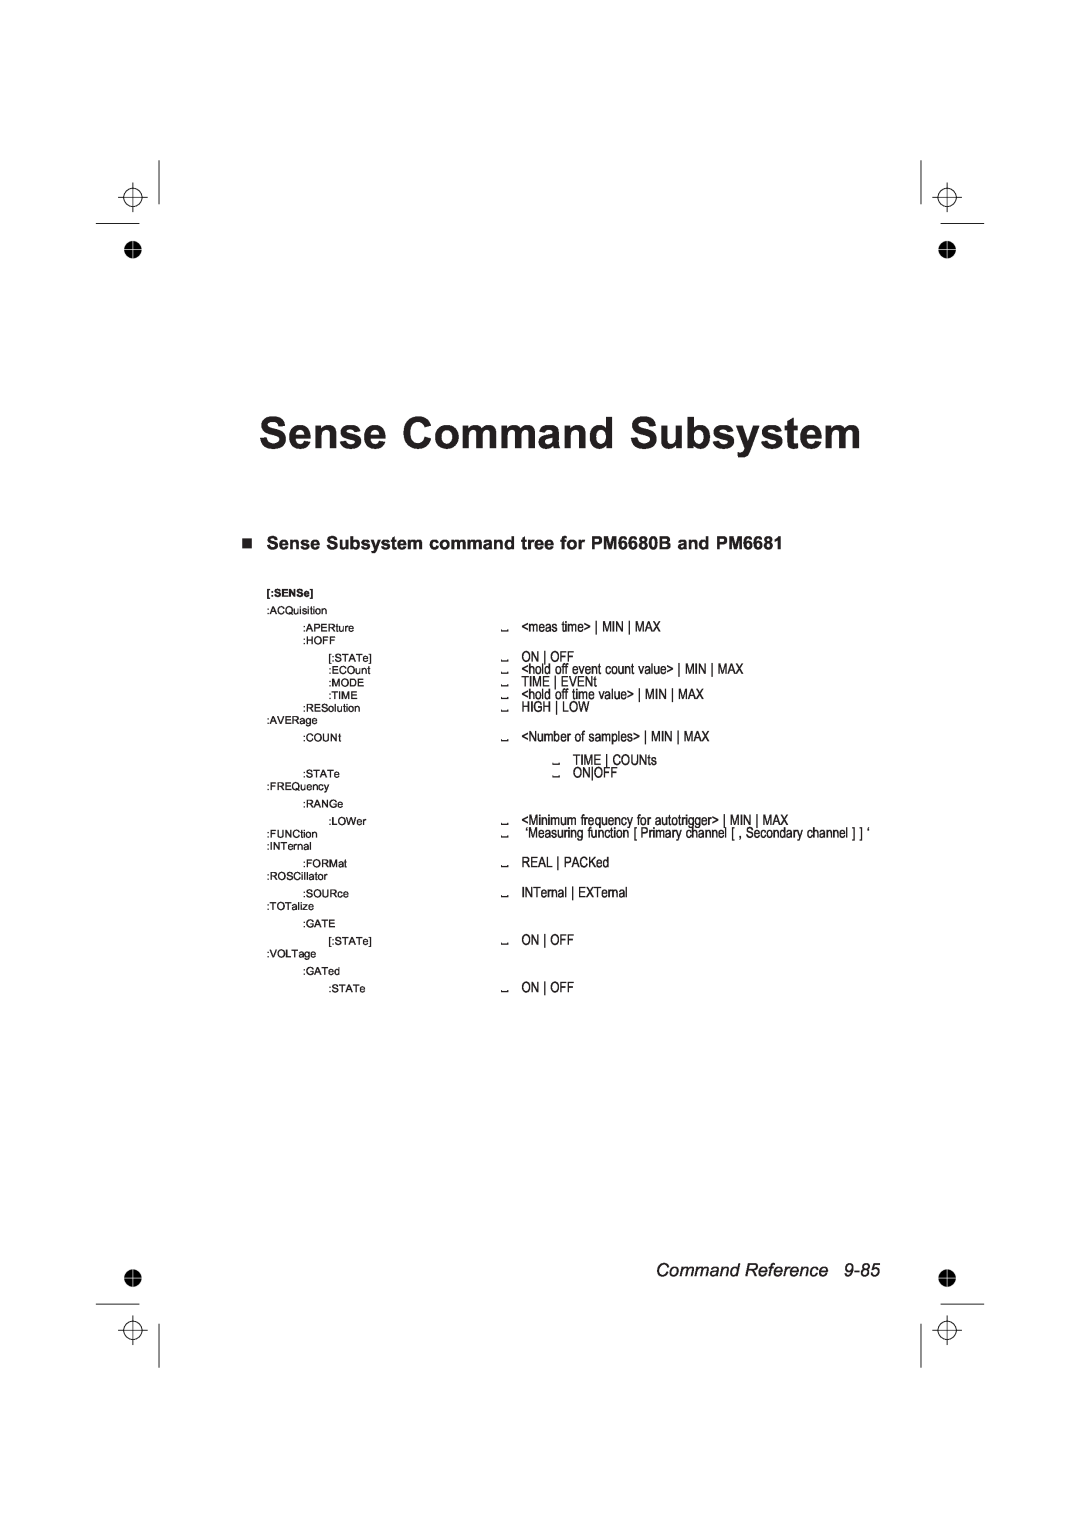 Fluke PM6685, PM6681R manual Sense Command Subsystem, Sense Subsystem command tree for PM6680B and PM6681, Command Reference 